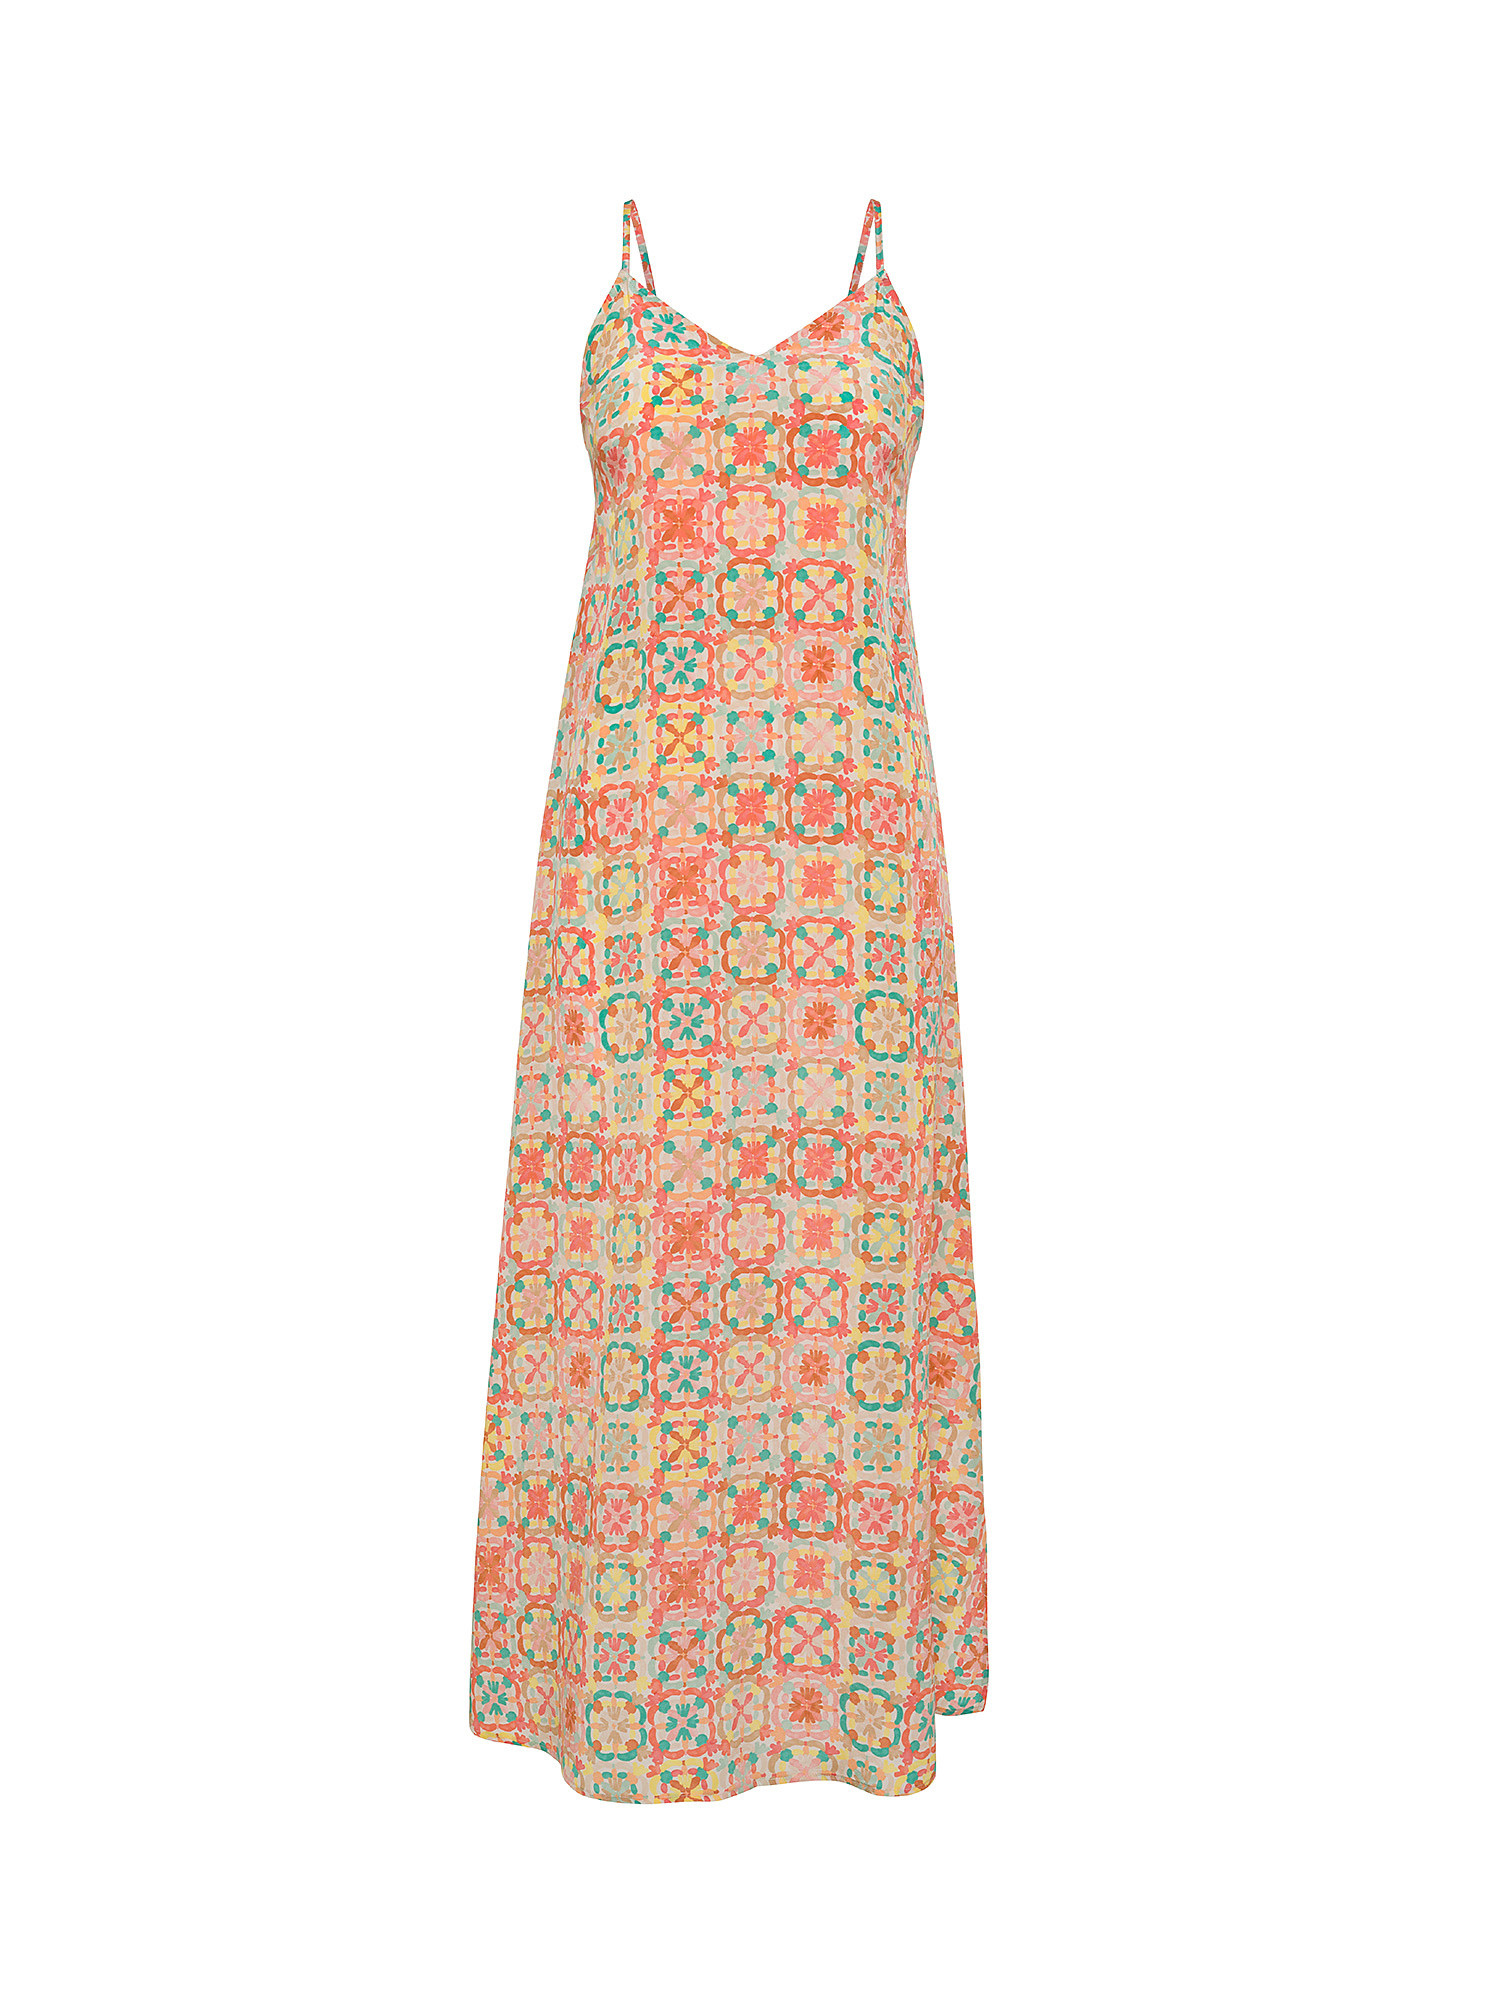 Momonì - Olivette dress in printed silk cràªpe de chine, Multicolor, large image number 0